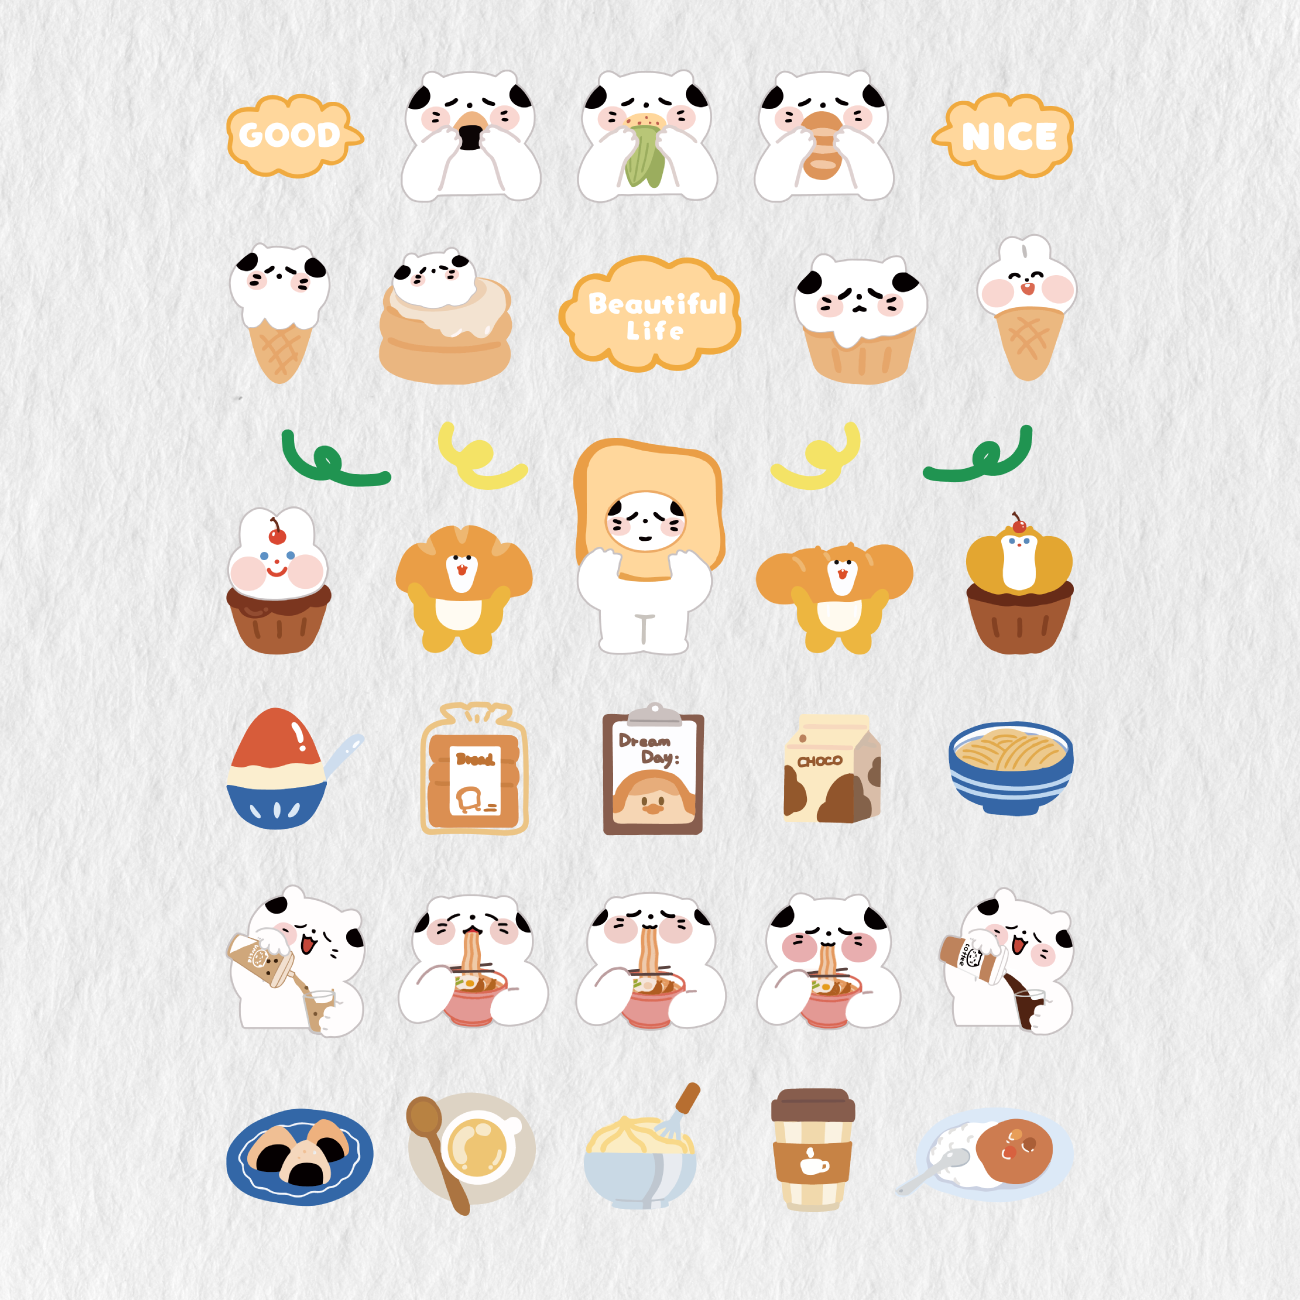 Cute Digital Sticker Set, Hobbies Theme Graphic by Big Barn